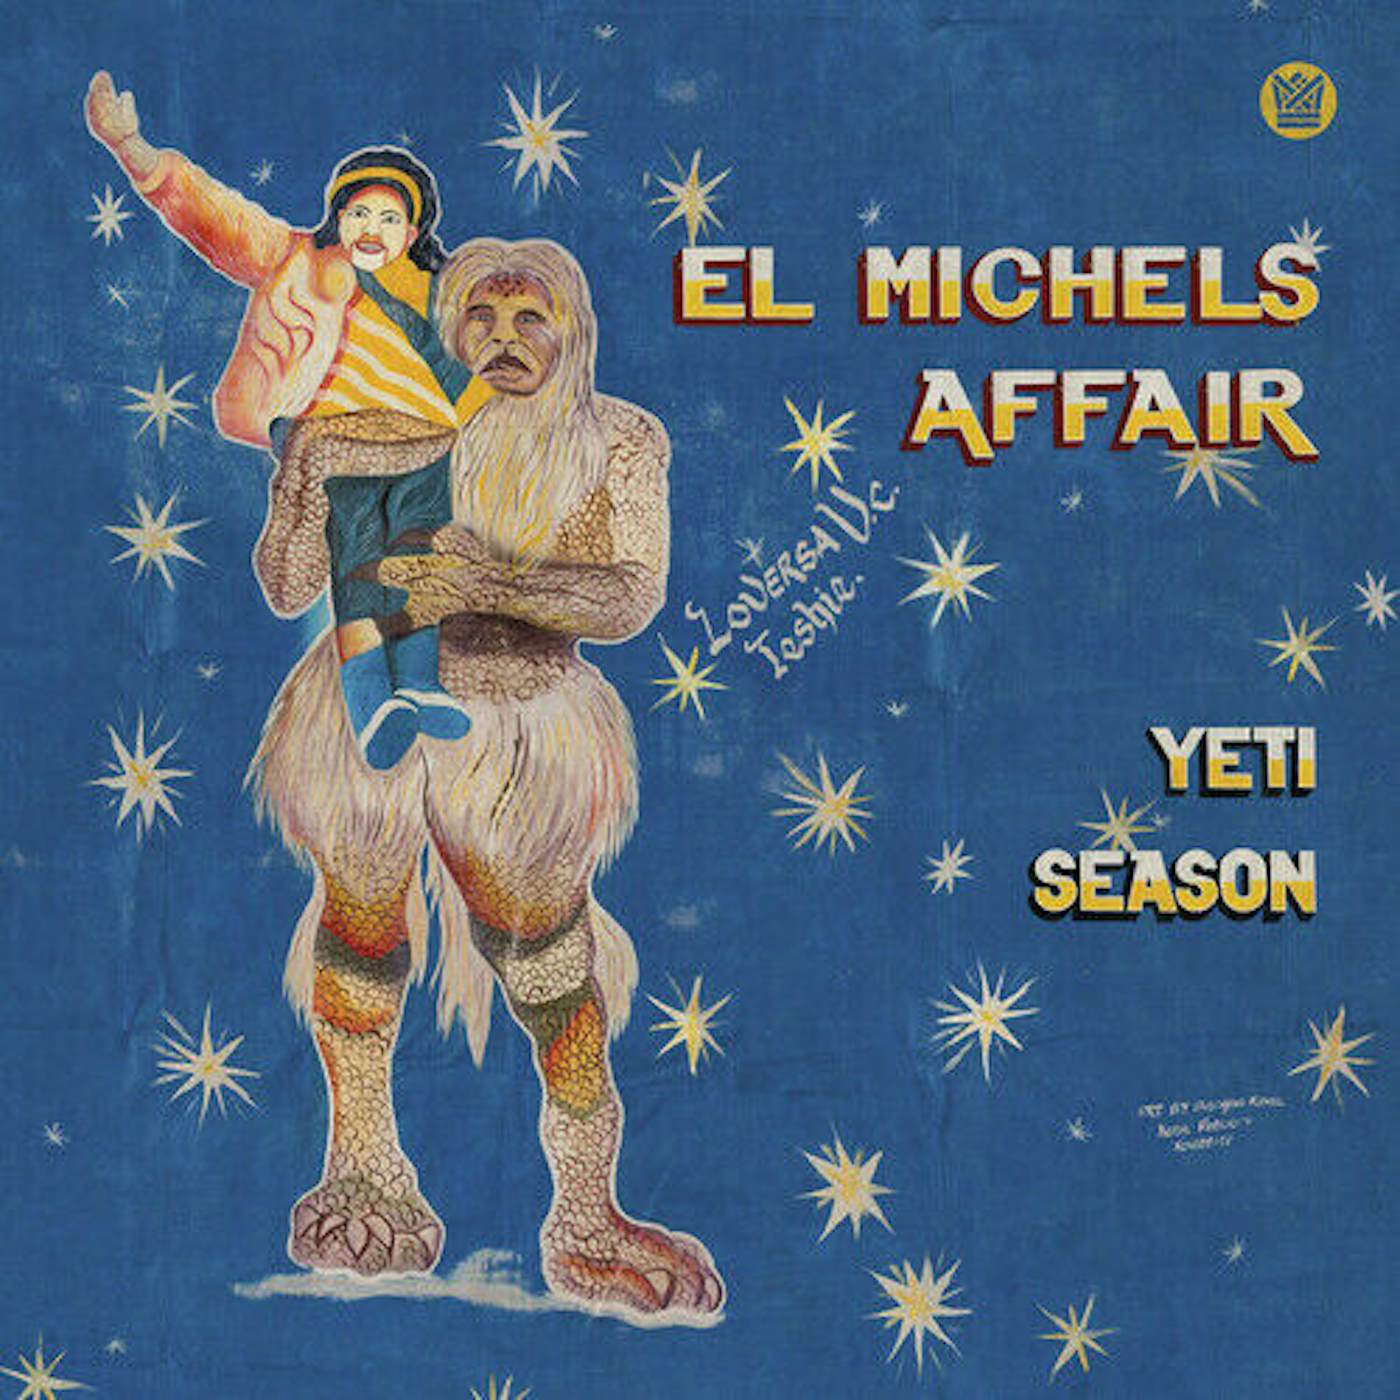 El Michels Affair YETI SEASON Vinyl Record